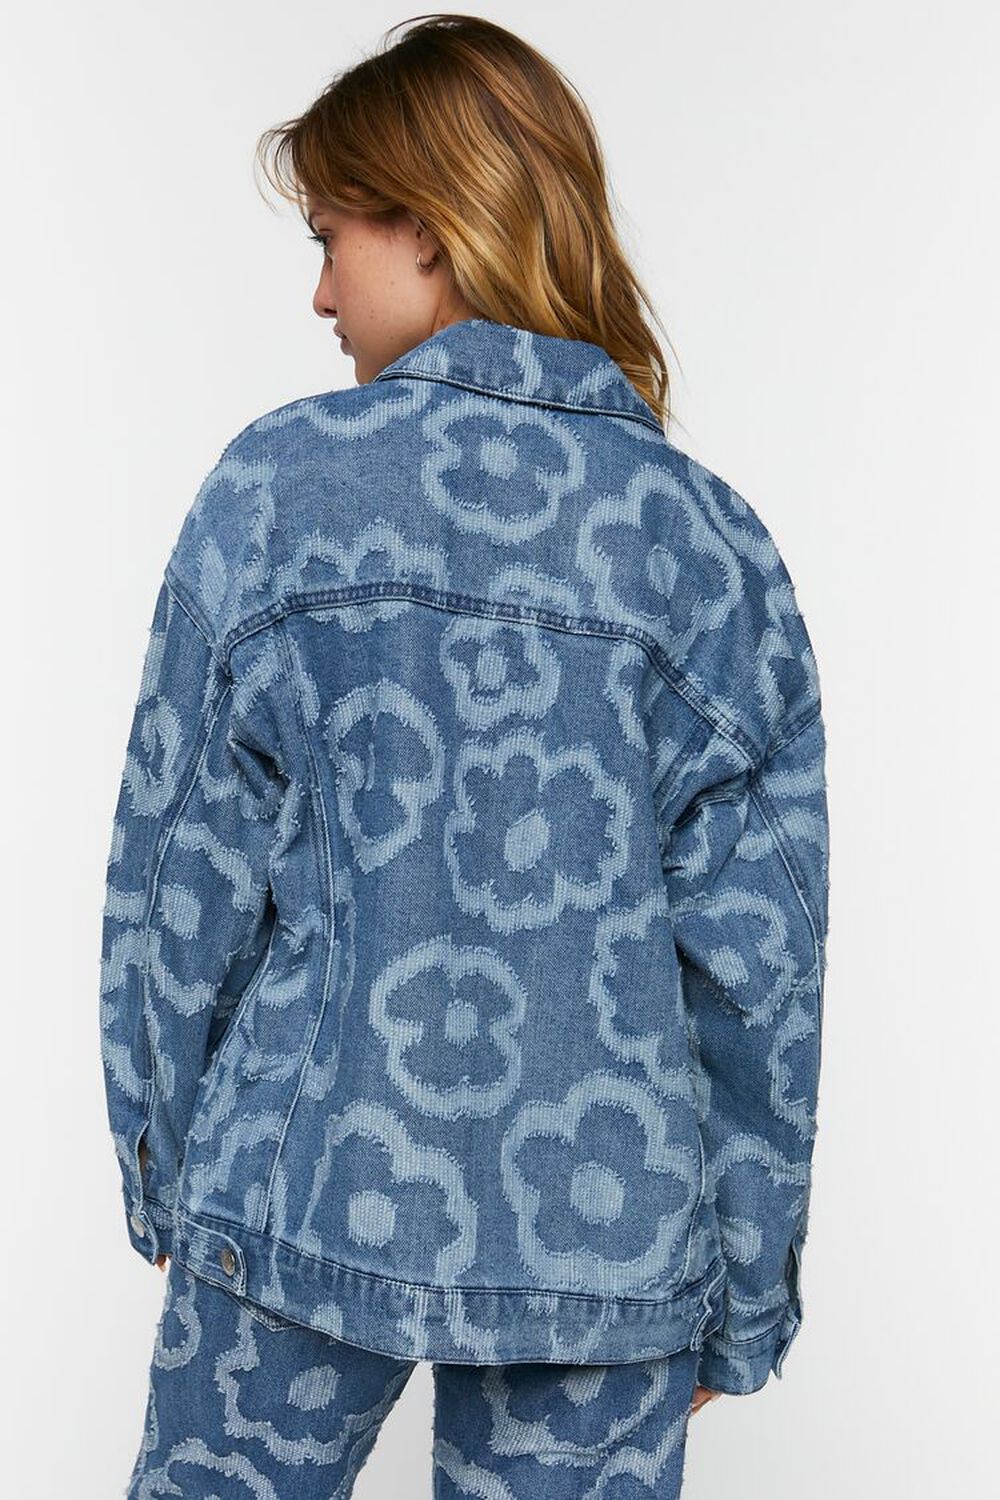 DENIM Textured Floral Print Trucker Jacket, image 3